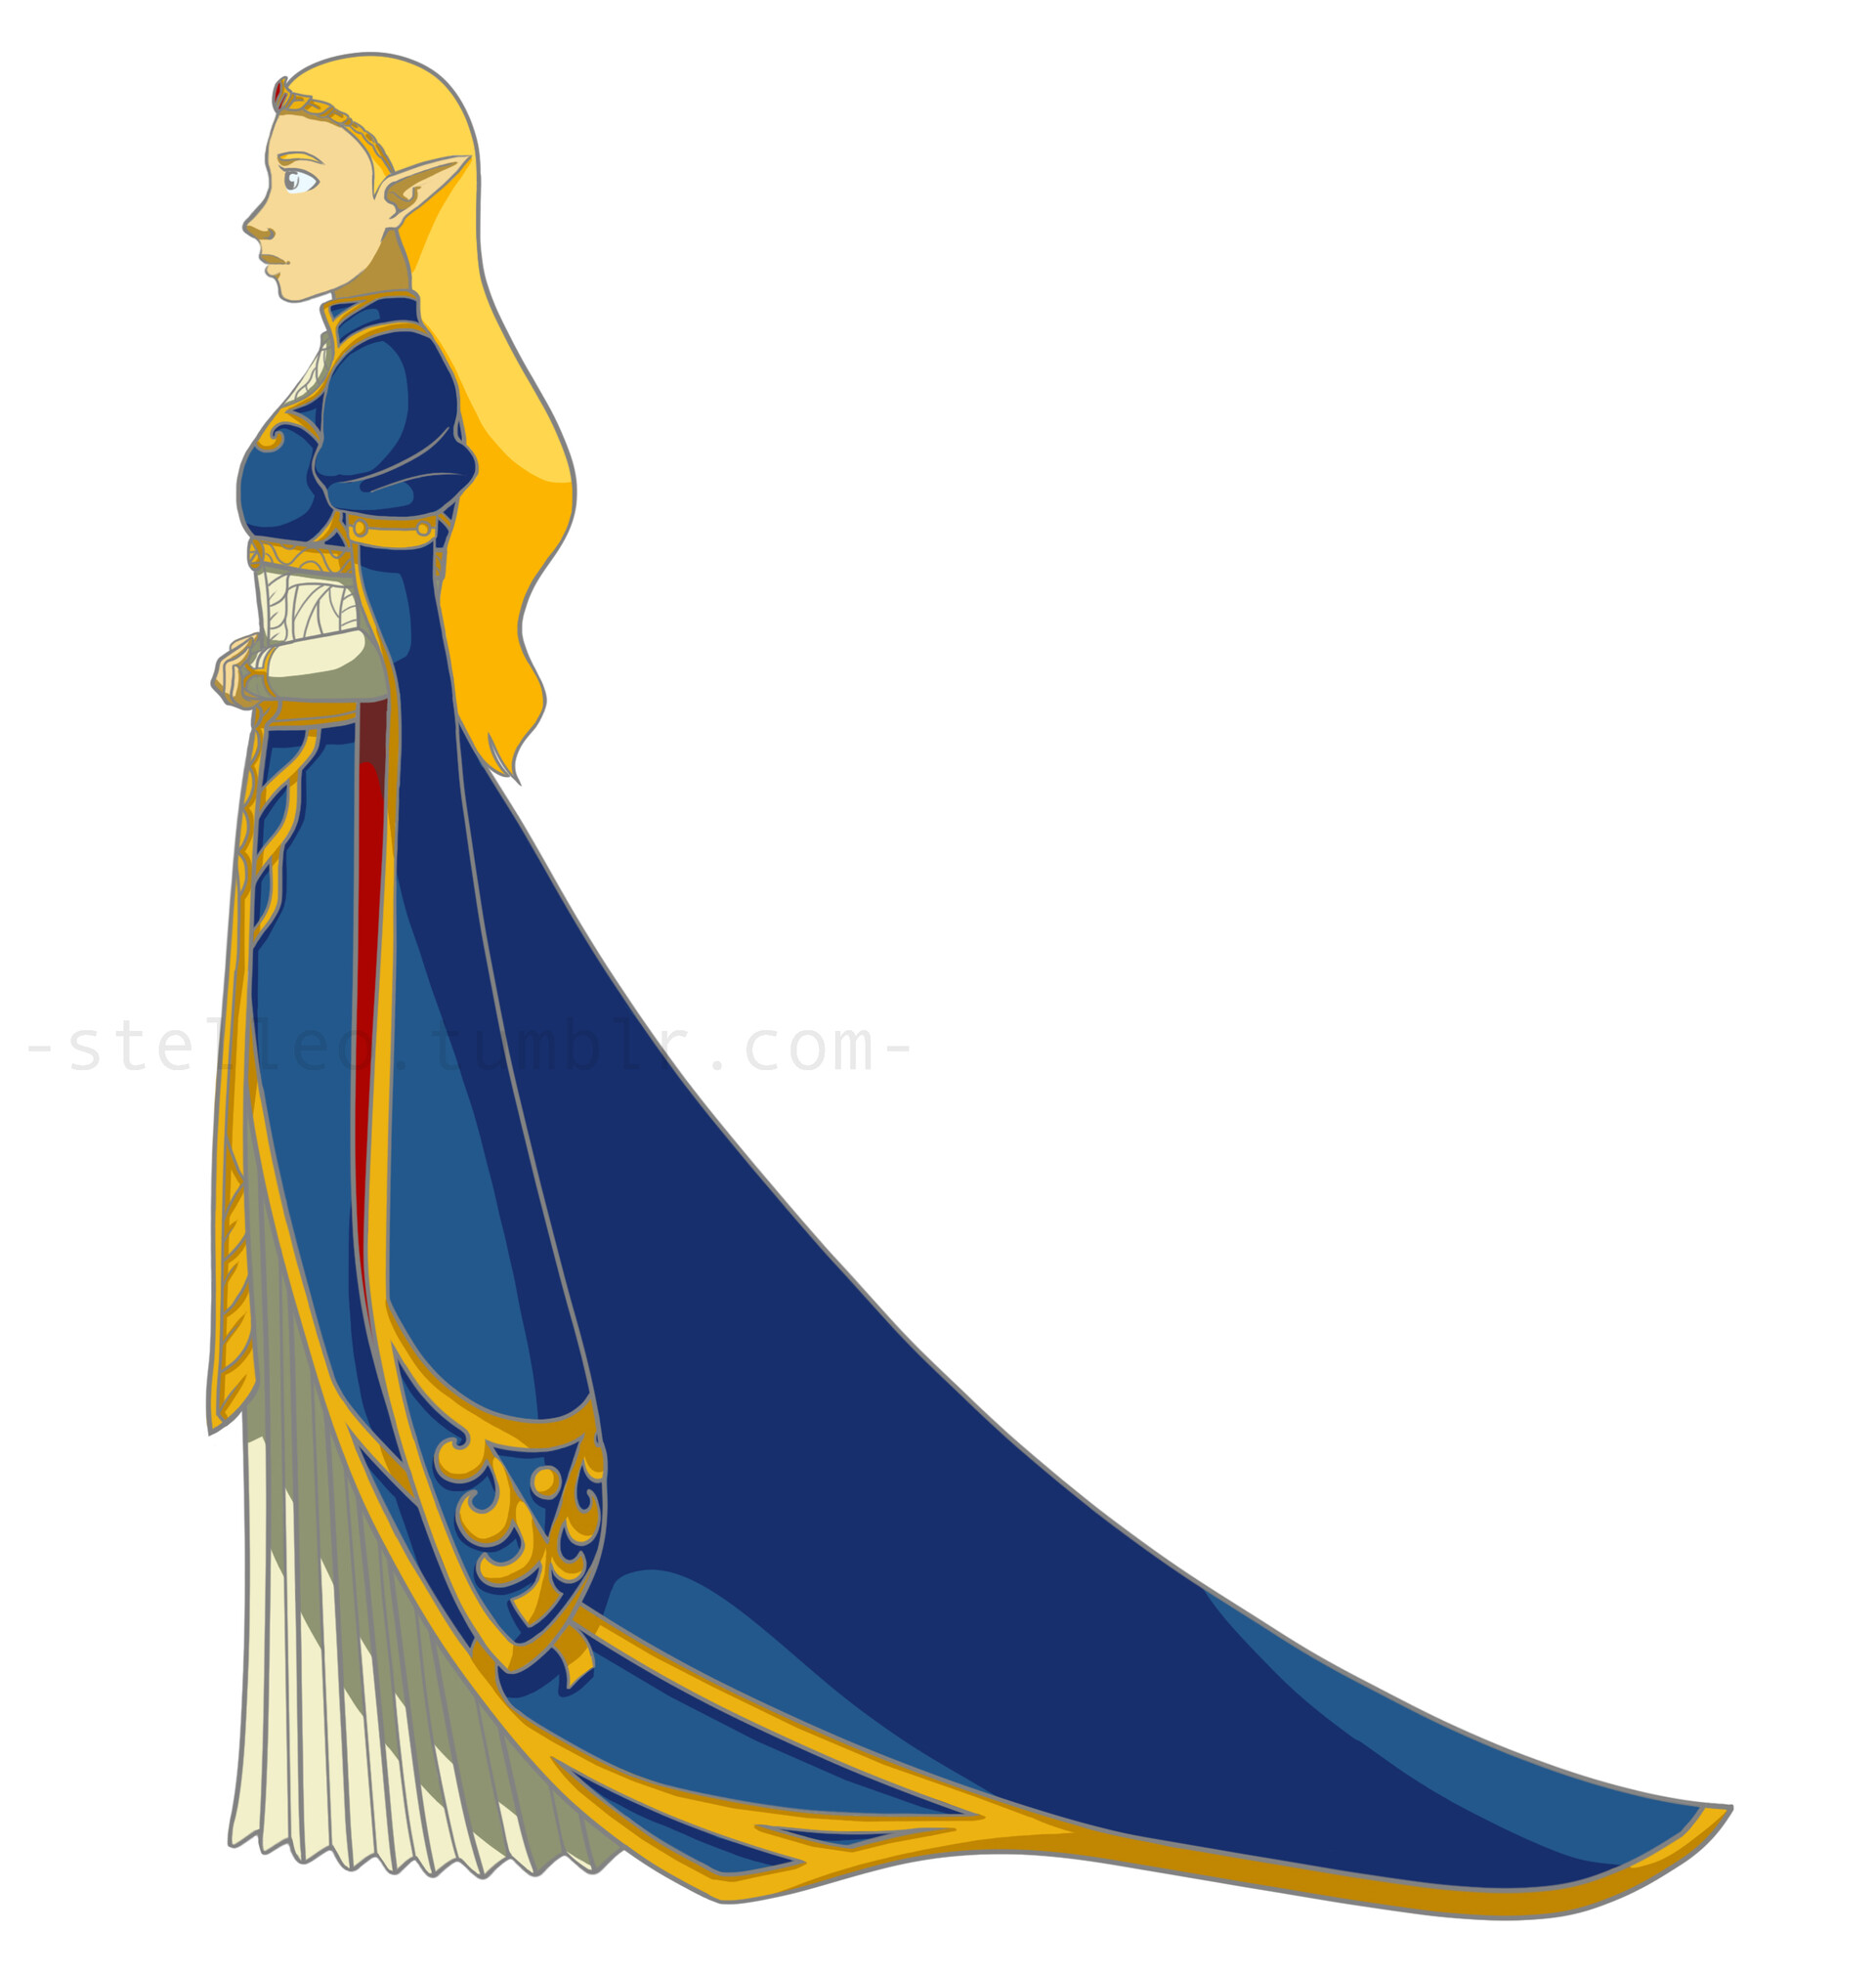 Zelda Dress 